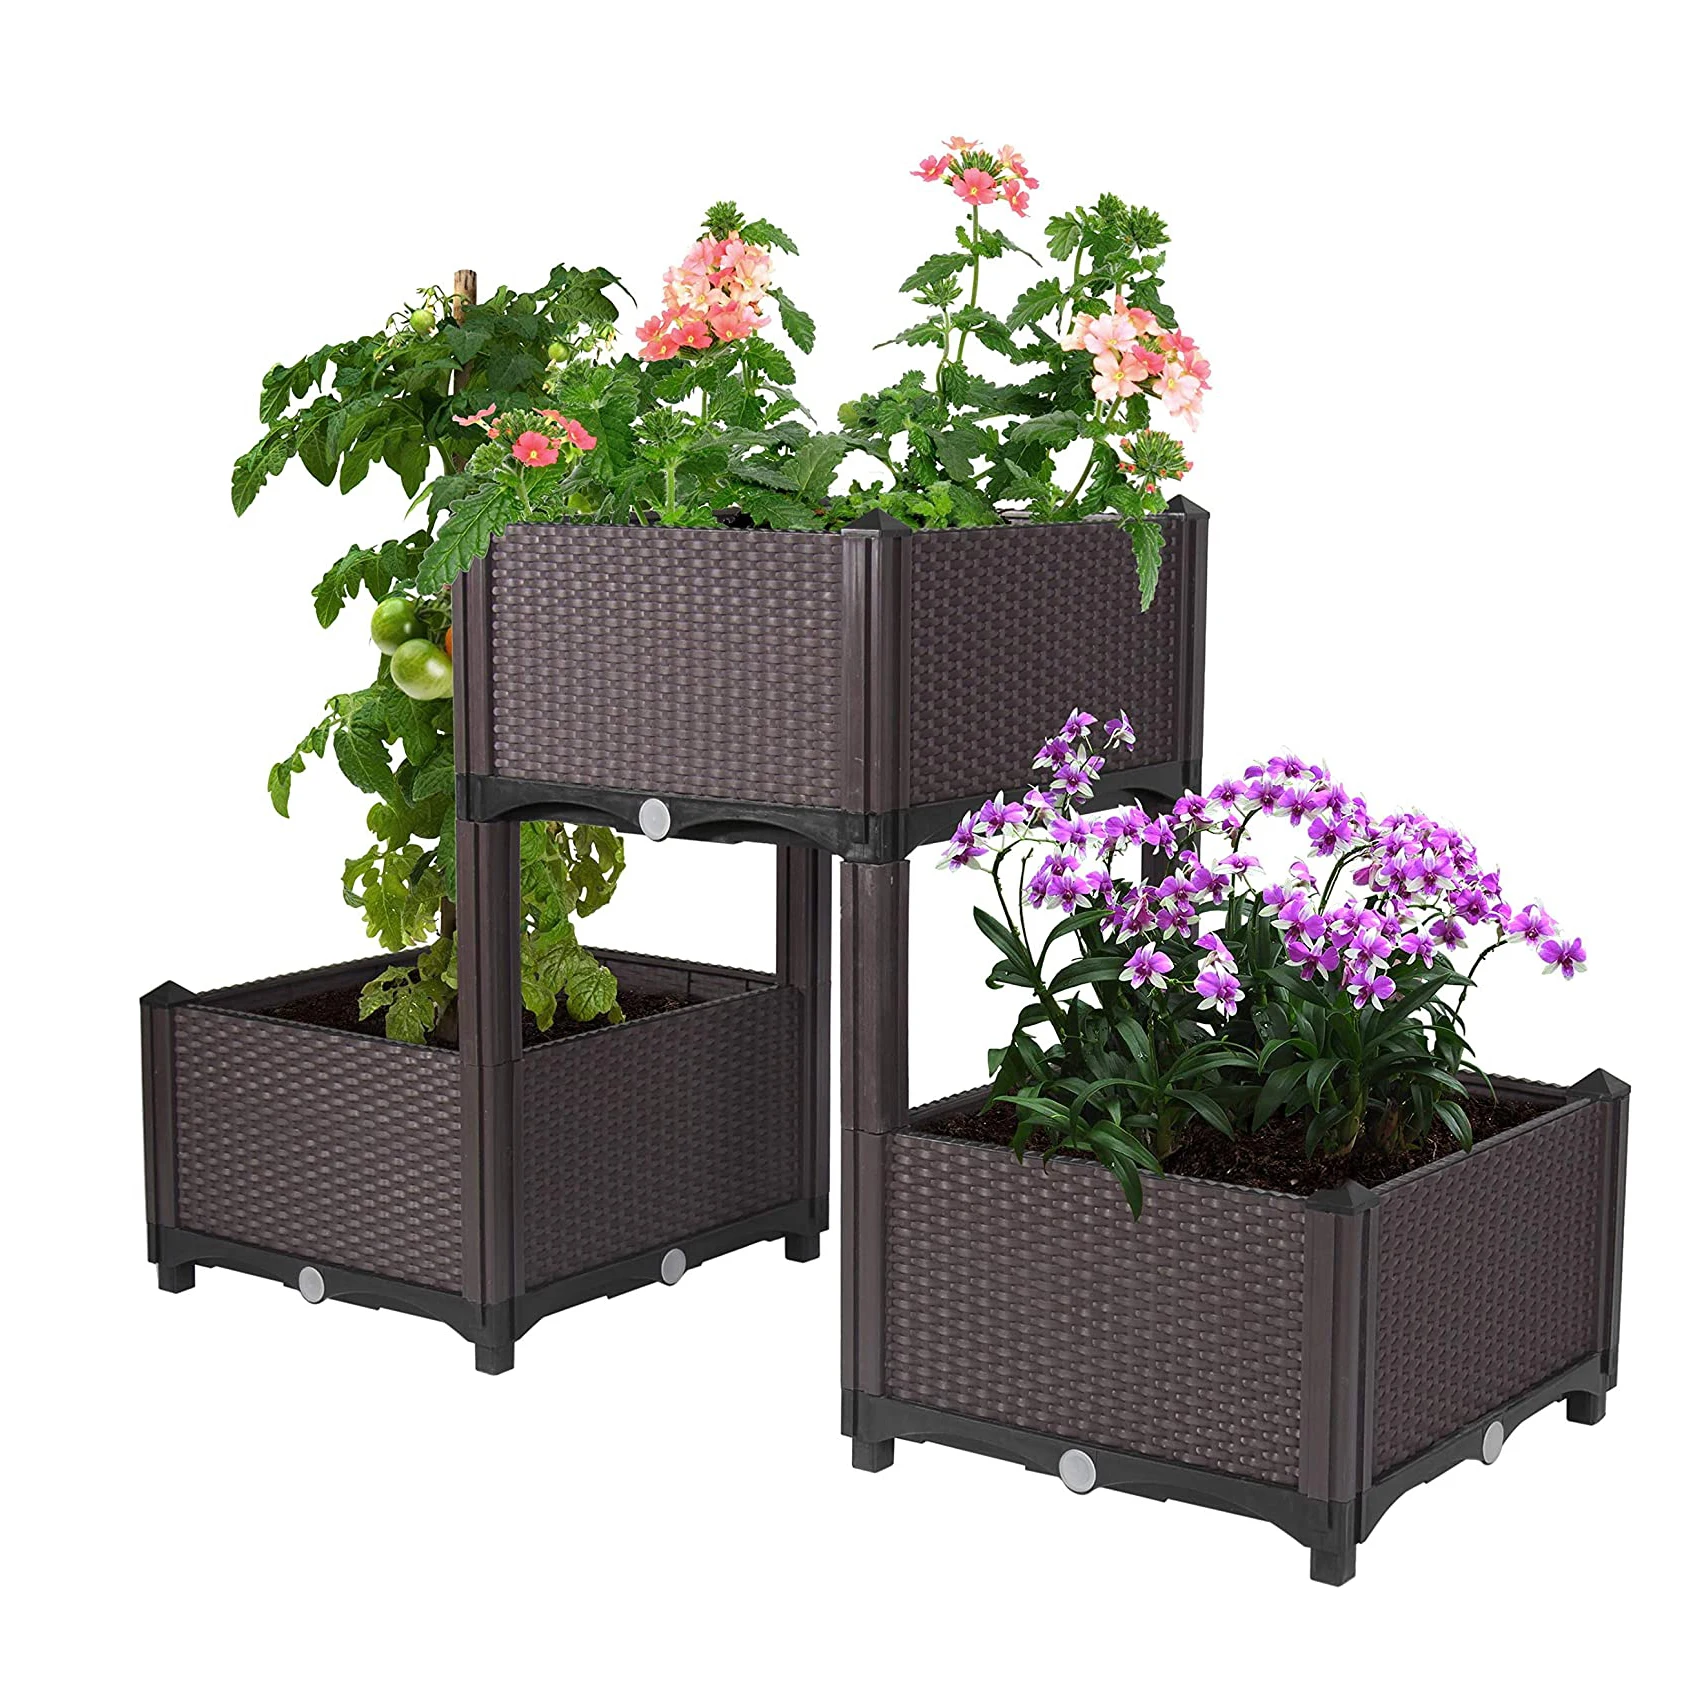 

Rectangular Raised Garden Bed Kit Indoor Outdoor Plastic Planter Grow Box for Fresh Vegetables, Herbs, Flowers & Succulents, Brown